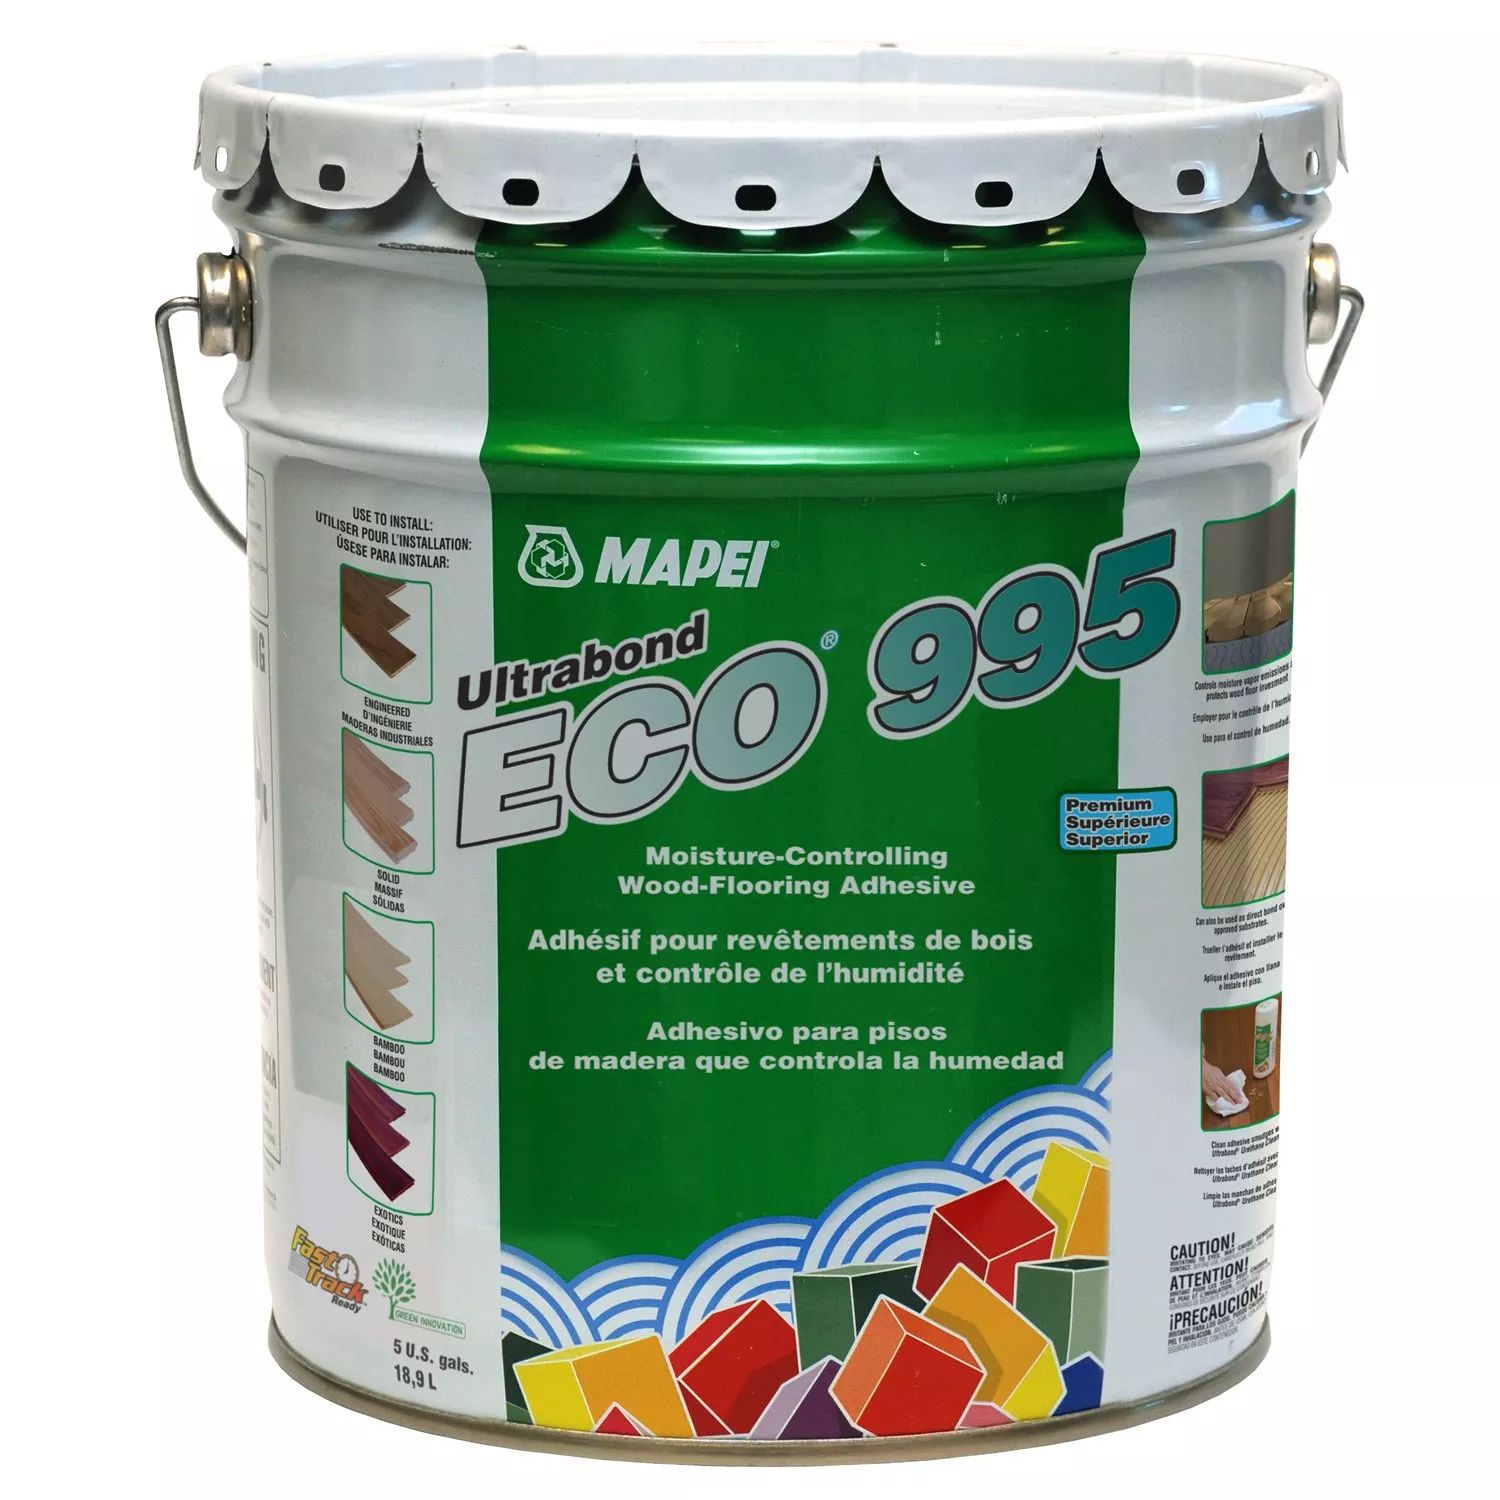 Mapei Ultrabond ECO 995 Wood Flooring Adhesive